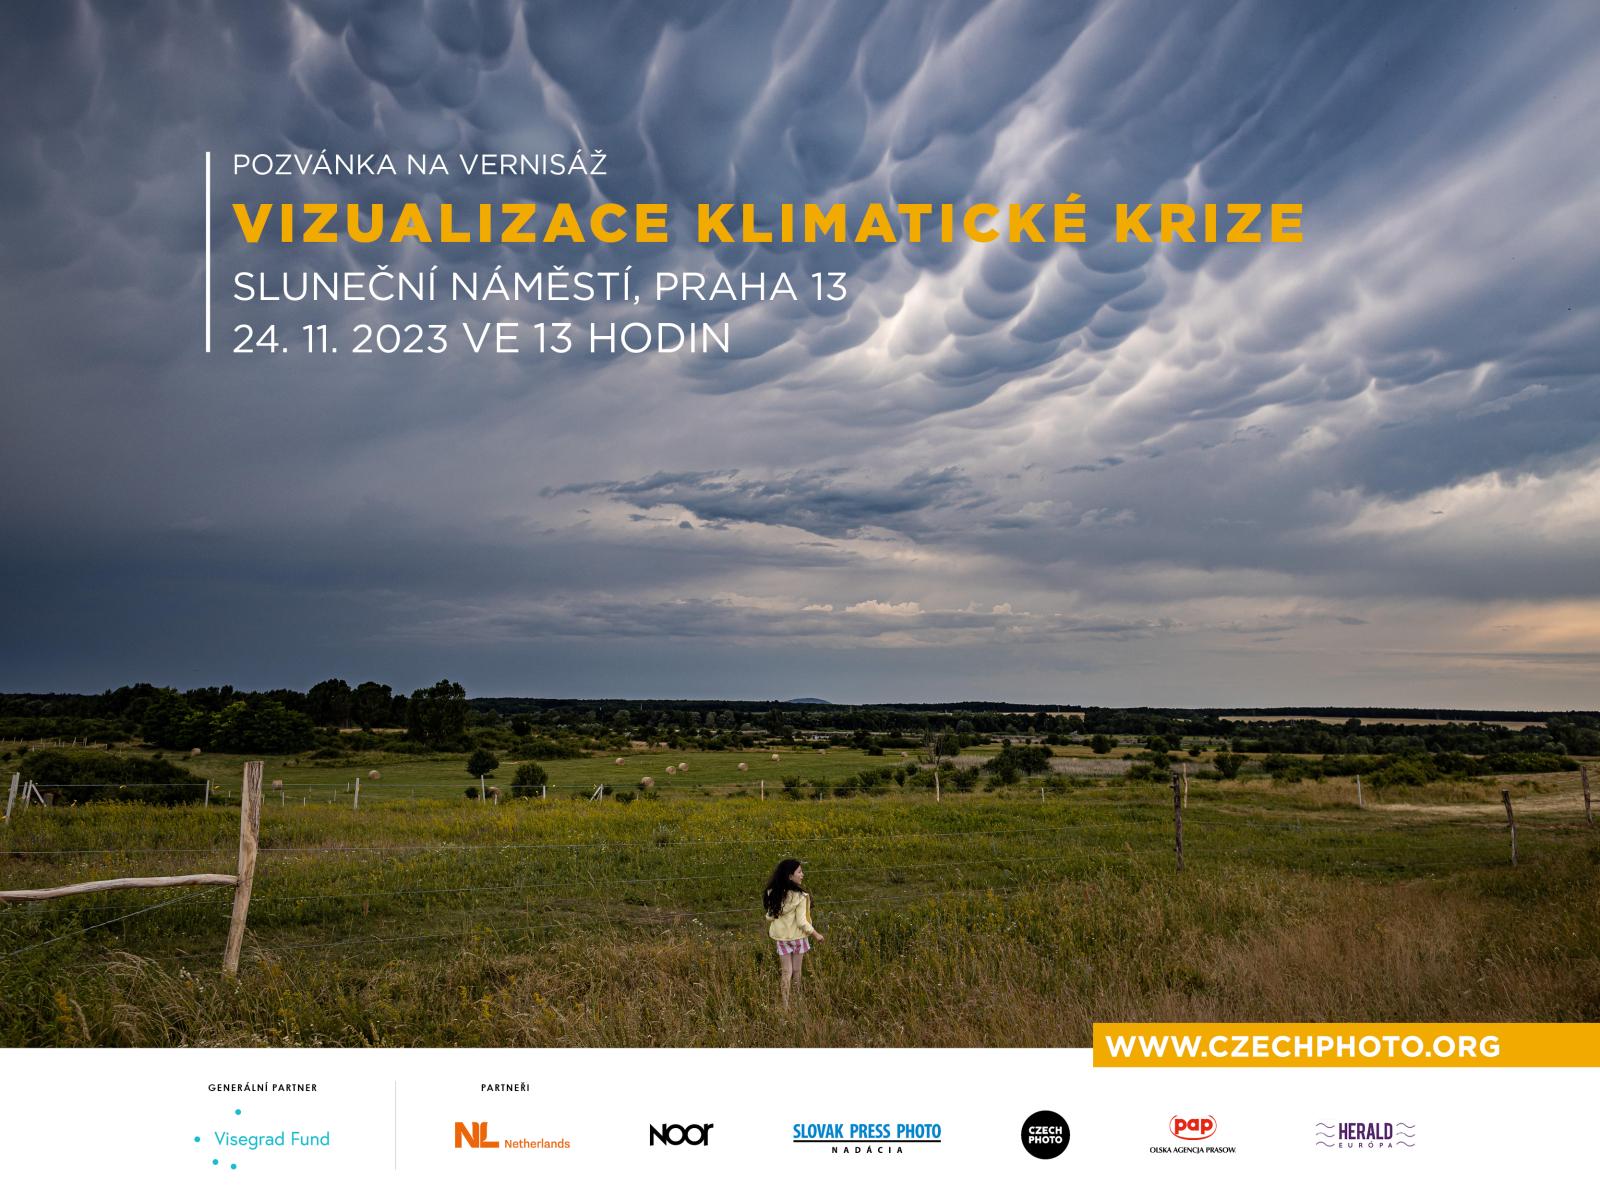 Visualising Climate Crisis exhibition in Prague, Czechia